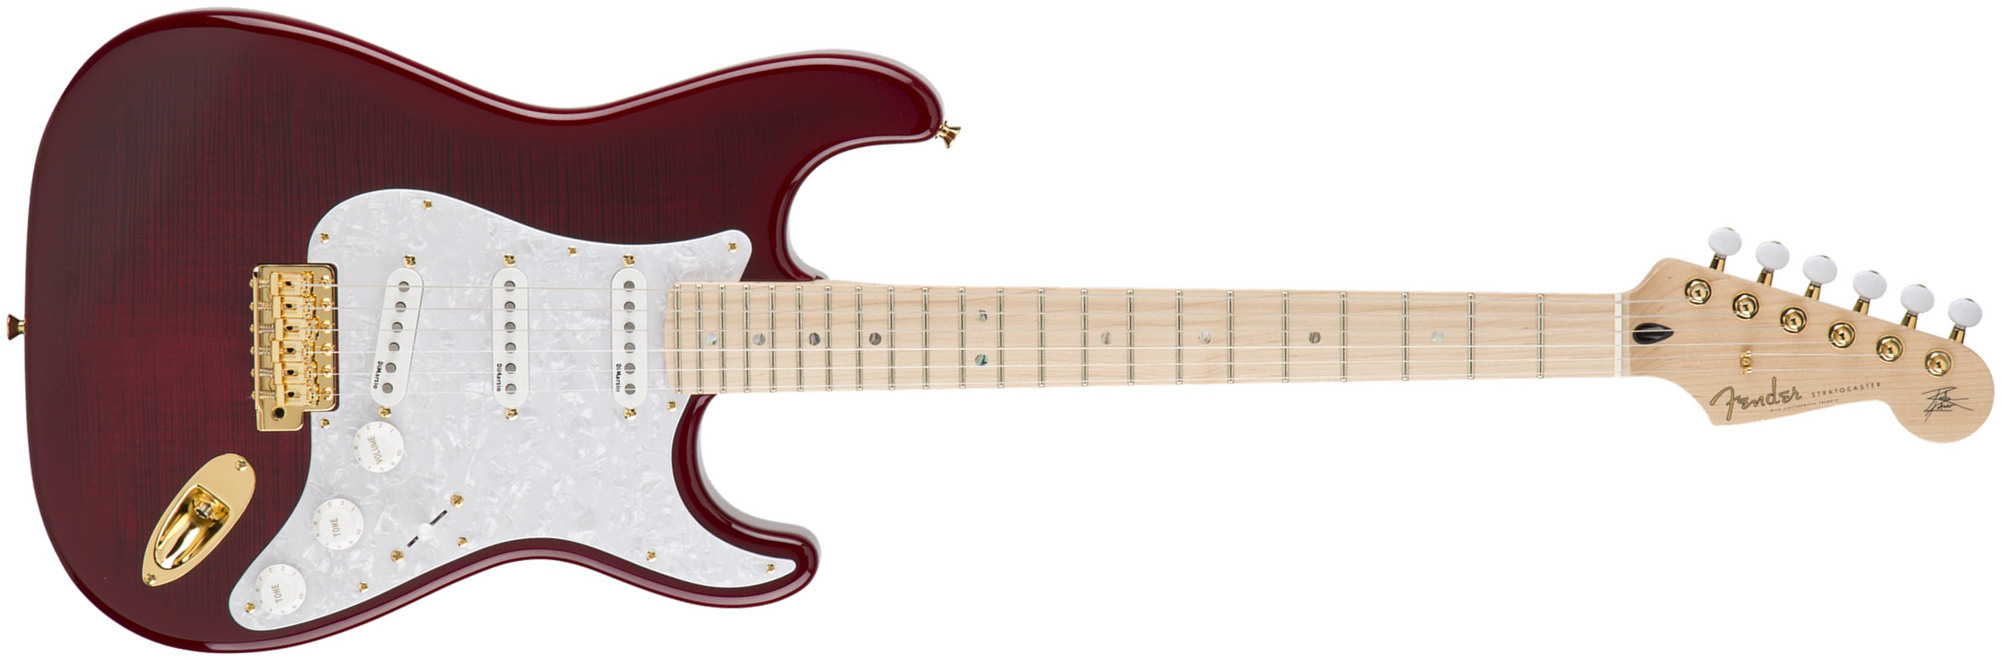 Fender Richie Kotzen Strat Japan Ltd 3s Mn - Transparent Red Burst - E-Gitarre in Str-Form - Main picture